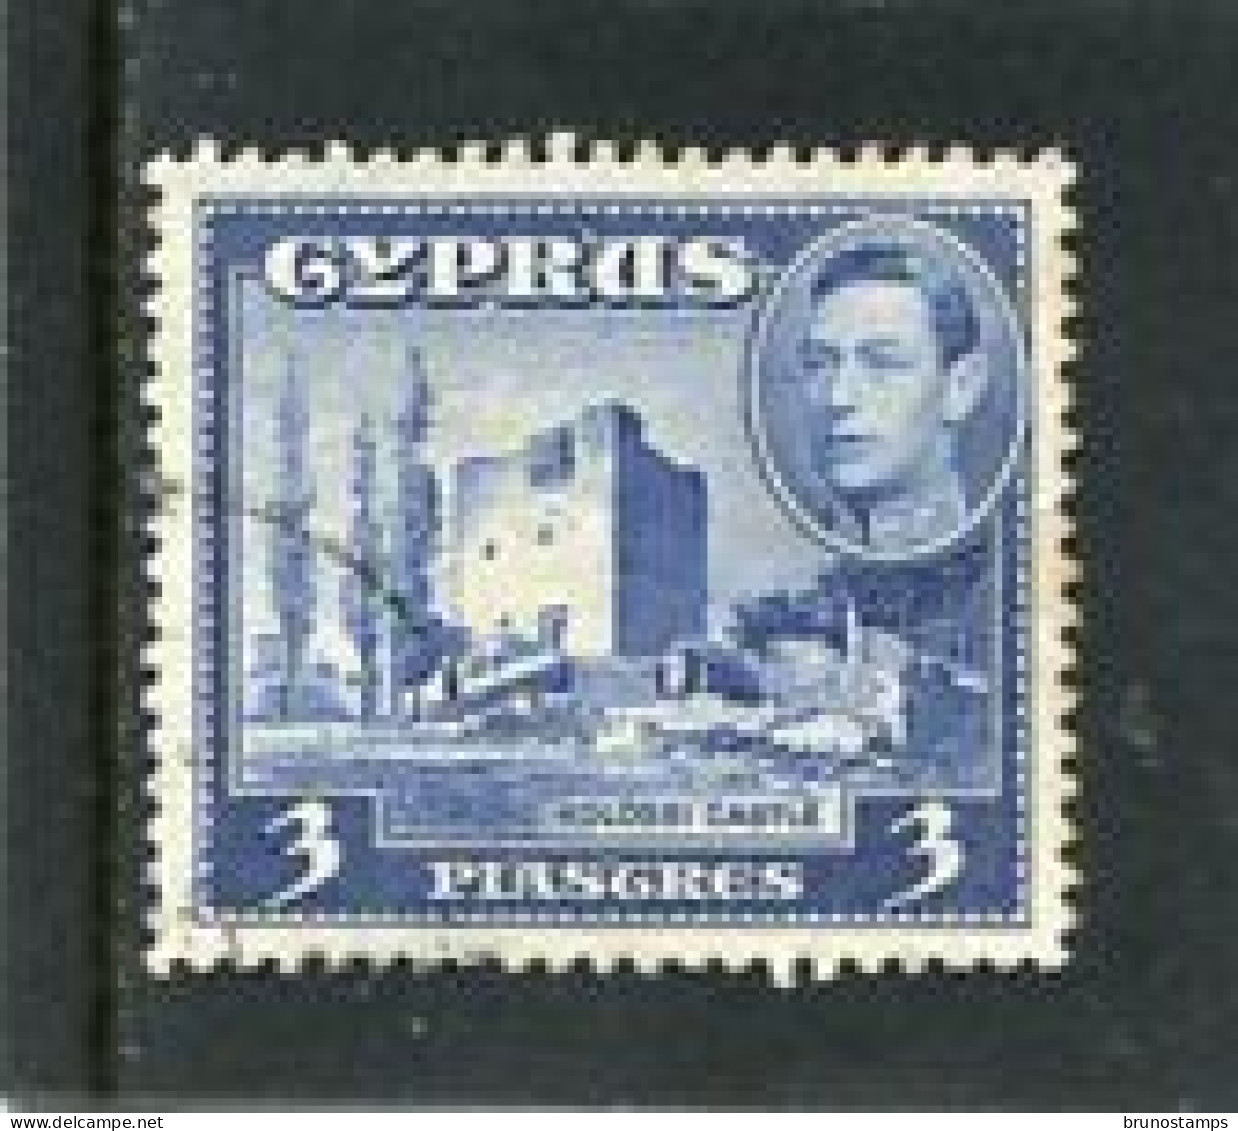 CYPRUS - 1942  GEORGE VI  3 Pi  BLUE  FINE USED - Chypre (...-1960)